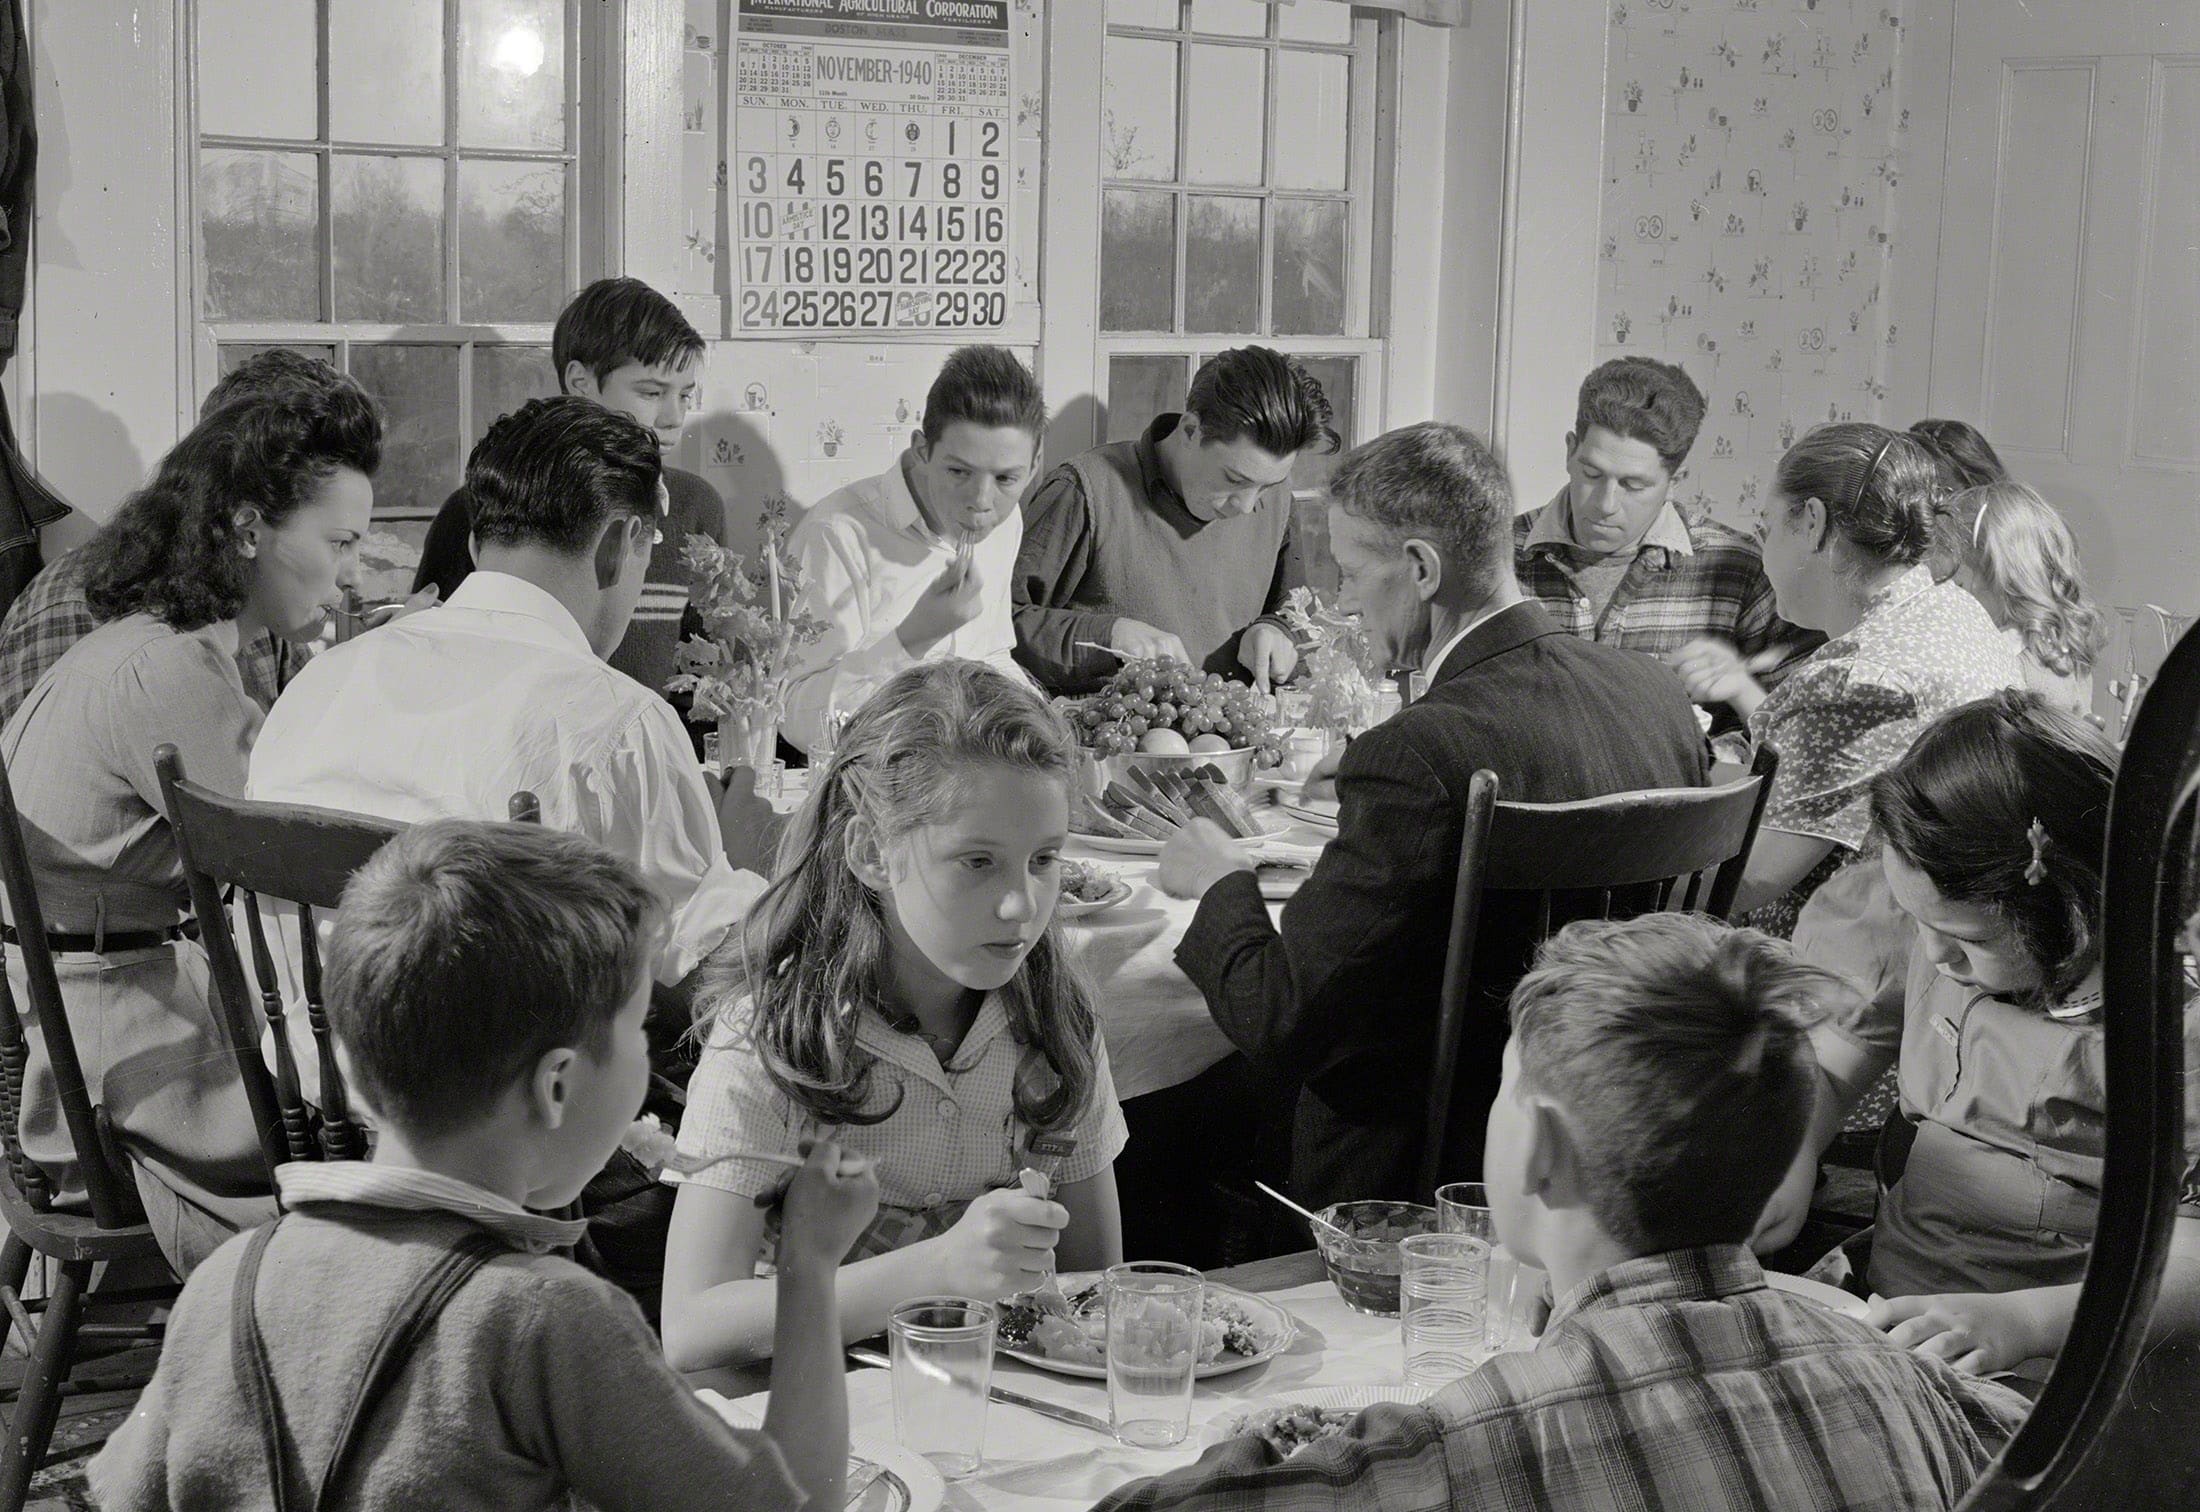 Timothy Levy Crouchs familj, Rogerene Quaker, vid deras årliga Thanksgiving-middag – Ledyard, Connecticut, 1940. Fotograf: Jack Delano, Farm Security Administration